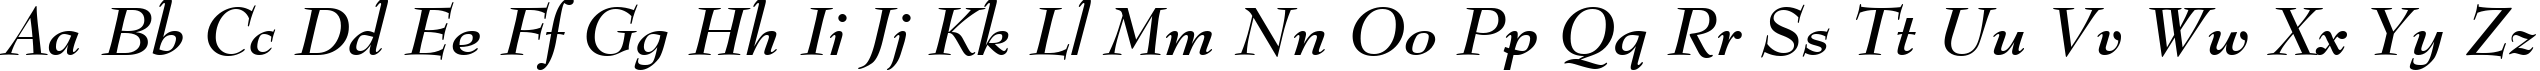 Пример написания английского алфавита шрифтом BernhardMod BT Bold Italic